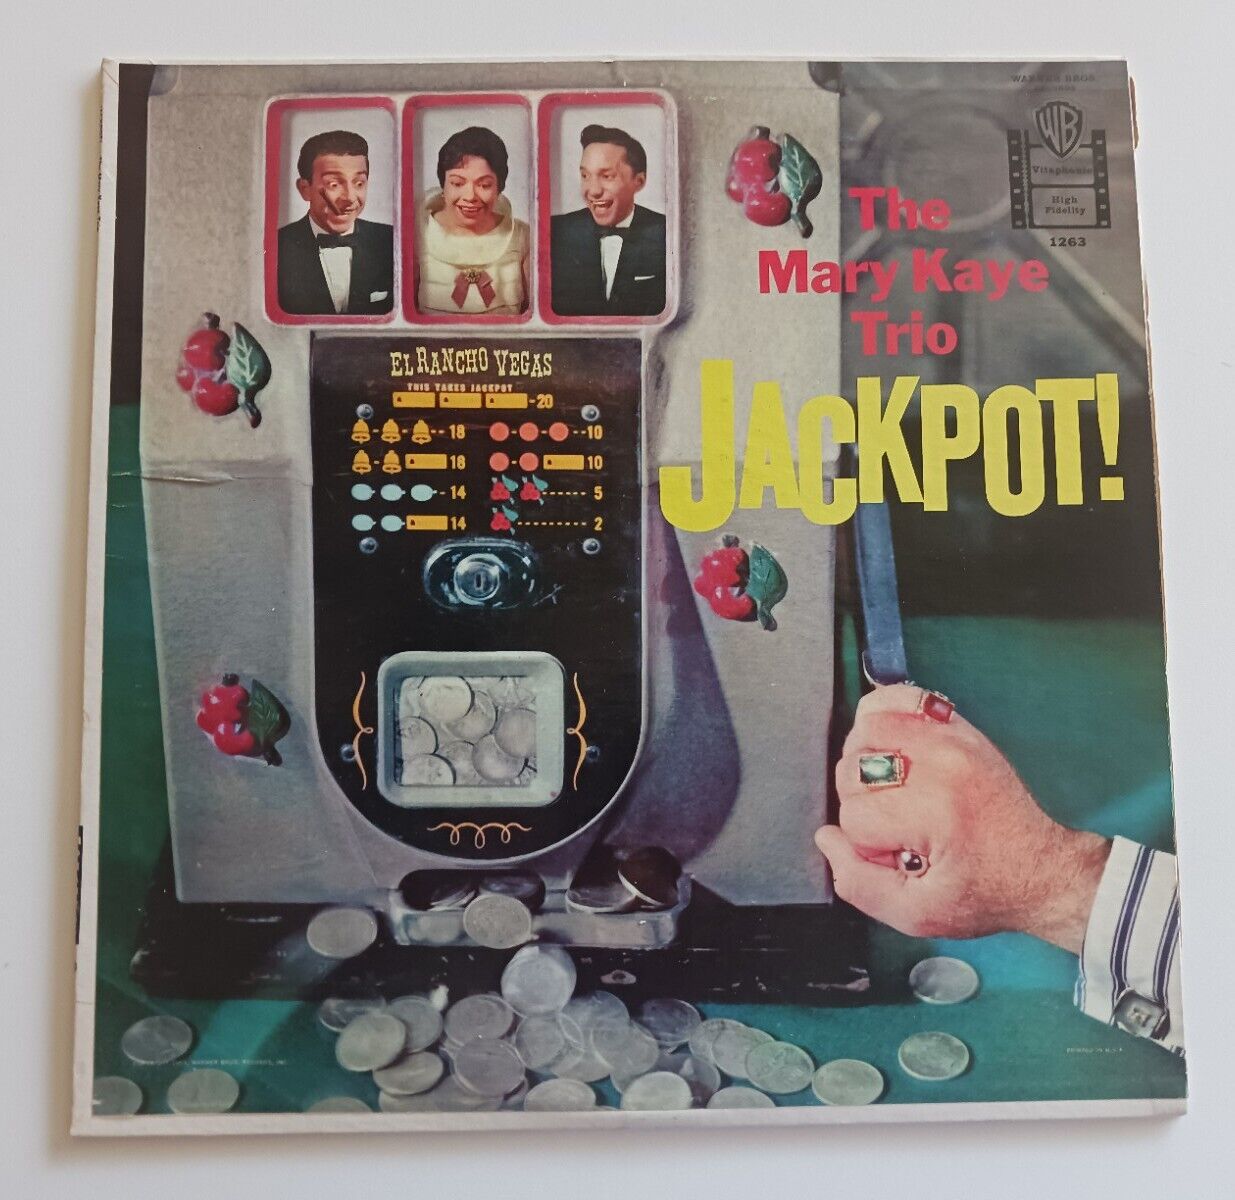 The Mary Kaye Trio - Jackpot - 1959 Vinyl W1263 VG++ LP